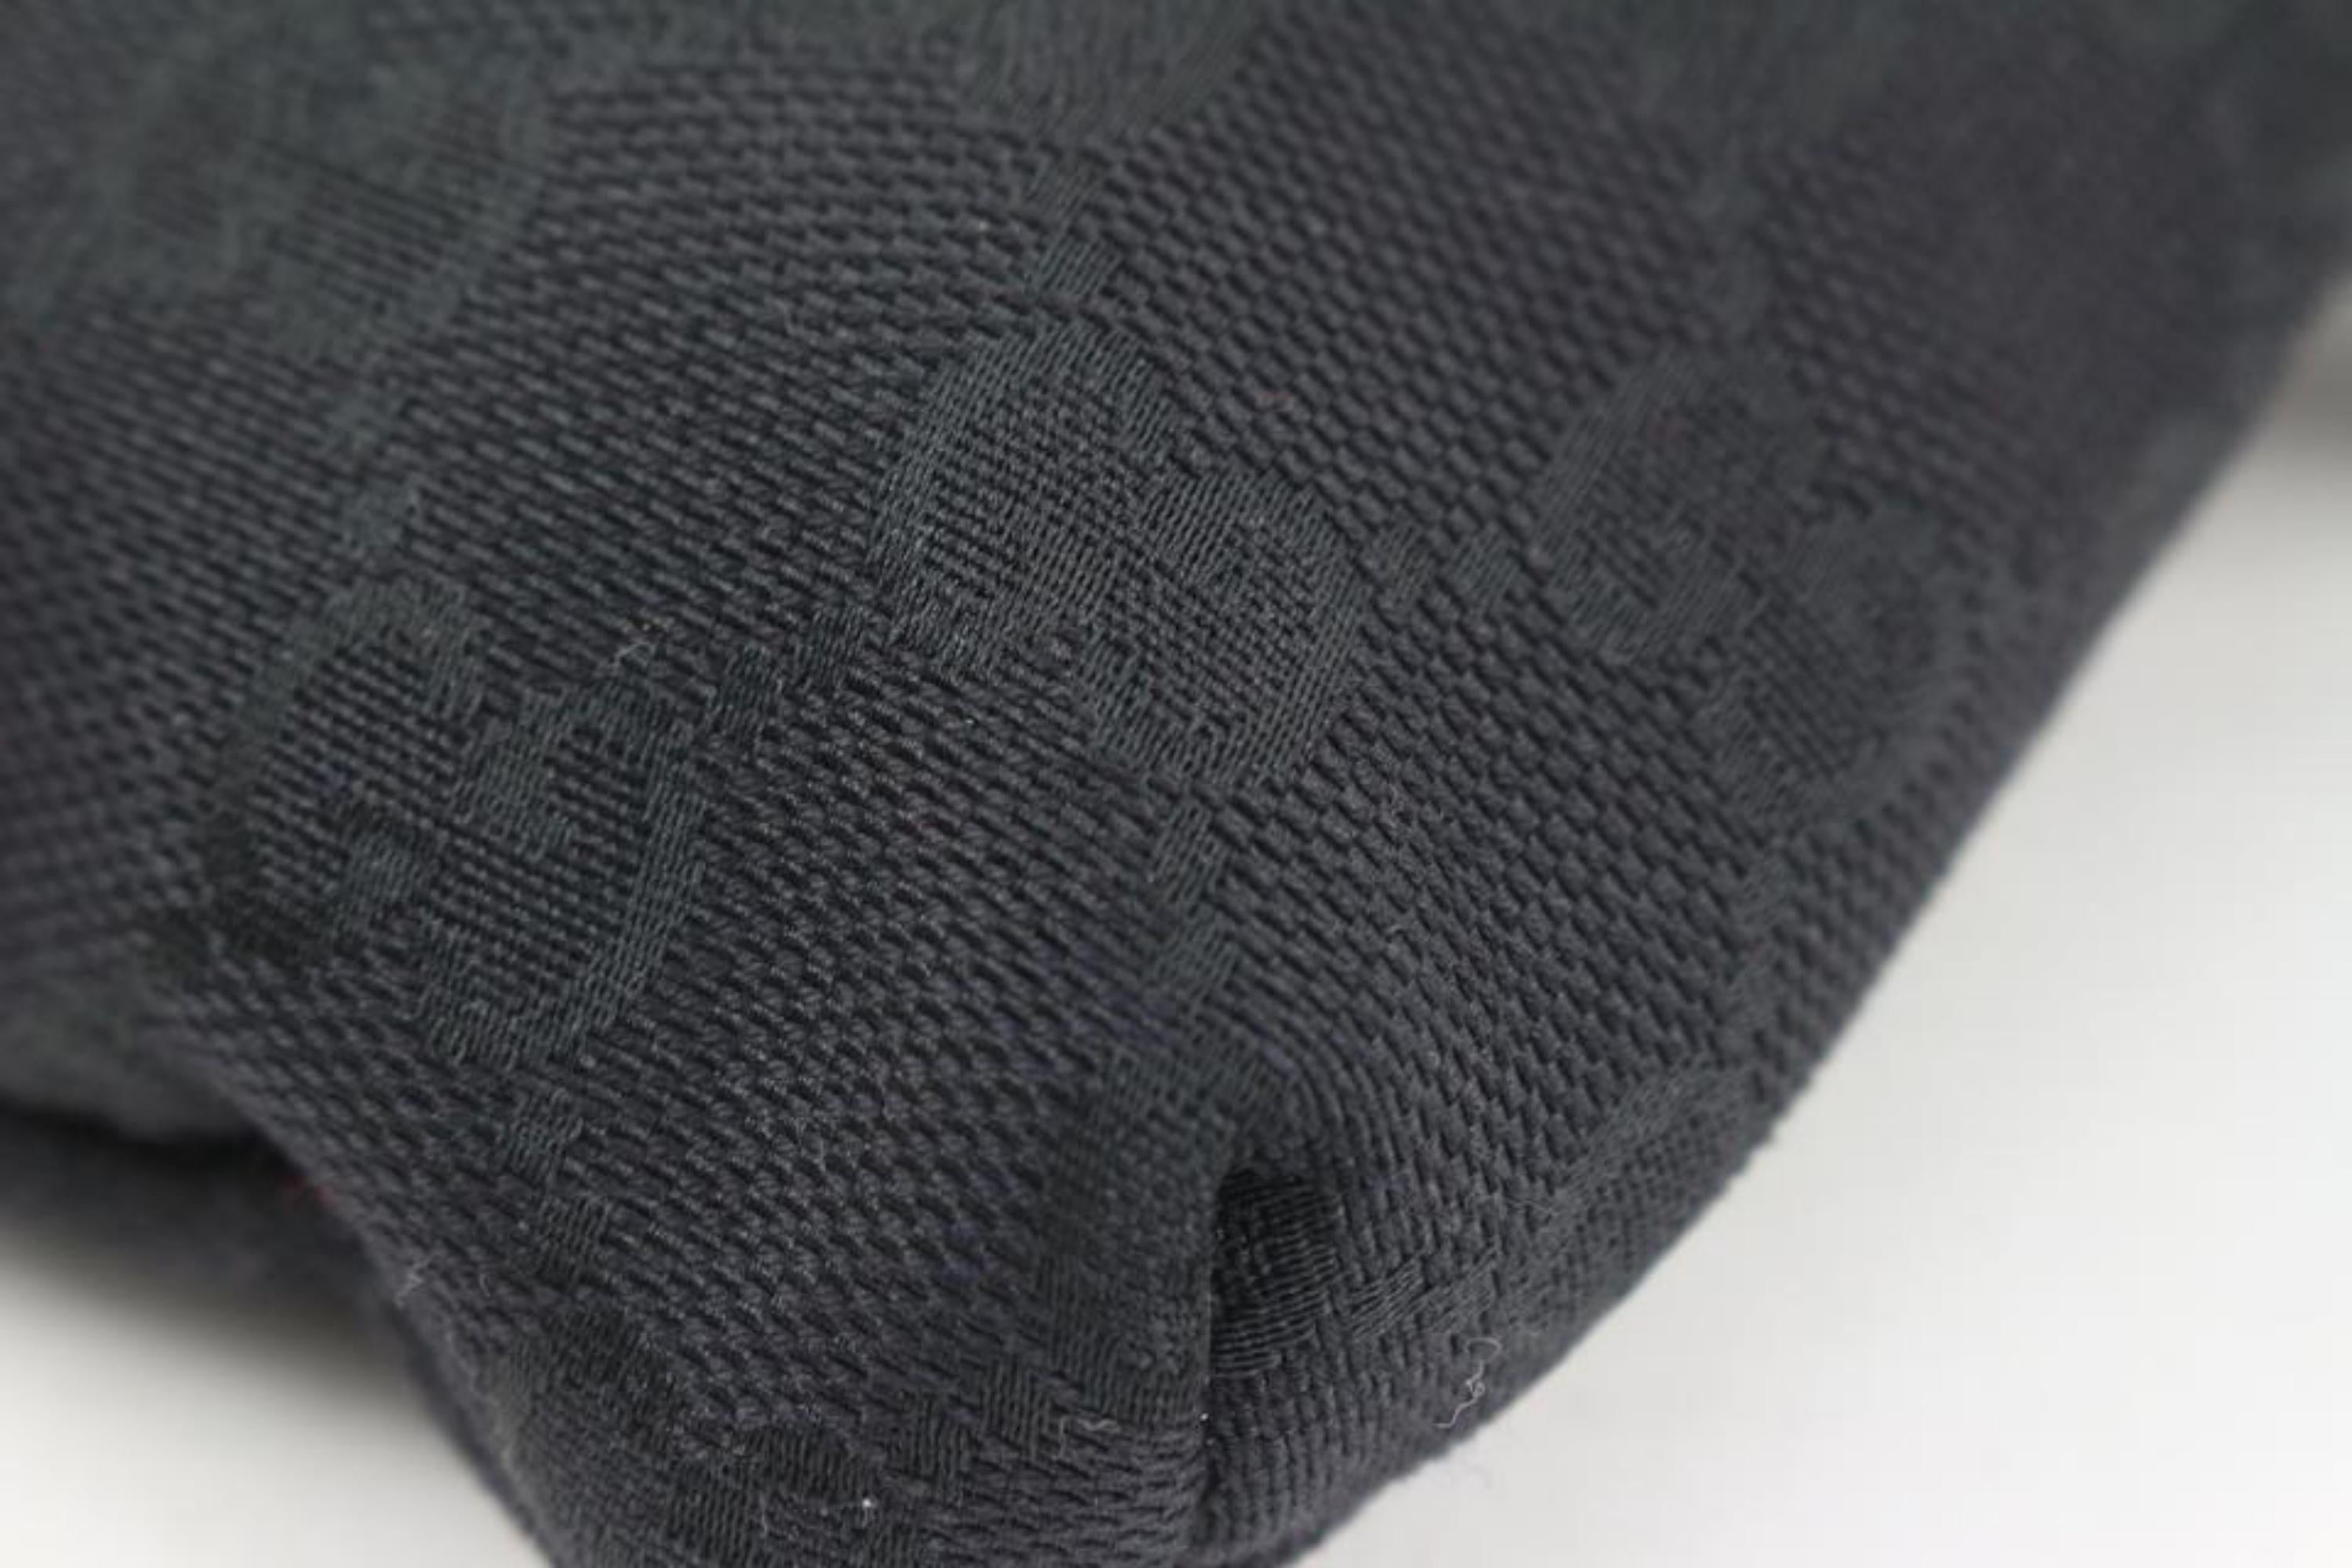 Gucci Rare Discontinued Black Monogram GG Web Belt Bag Fanny Pack 22g131s 3